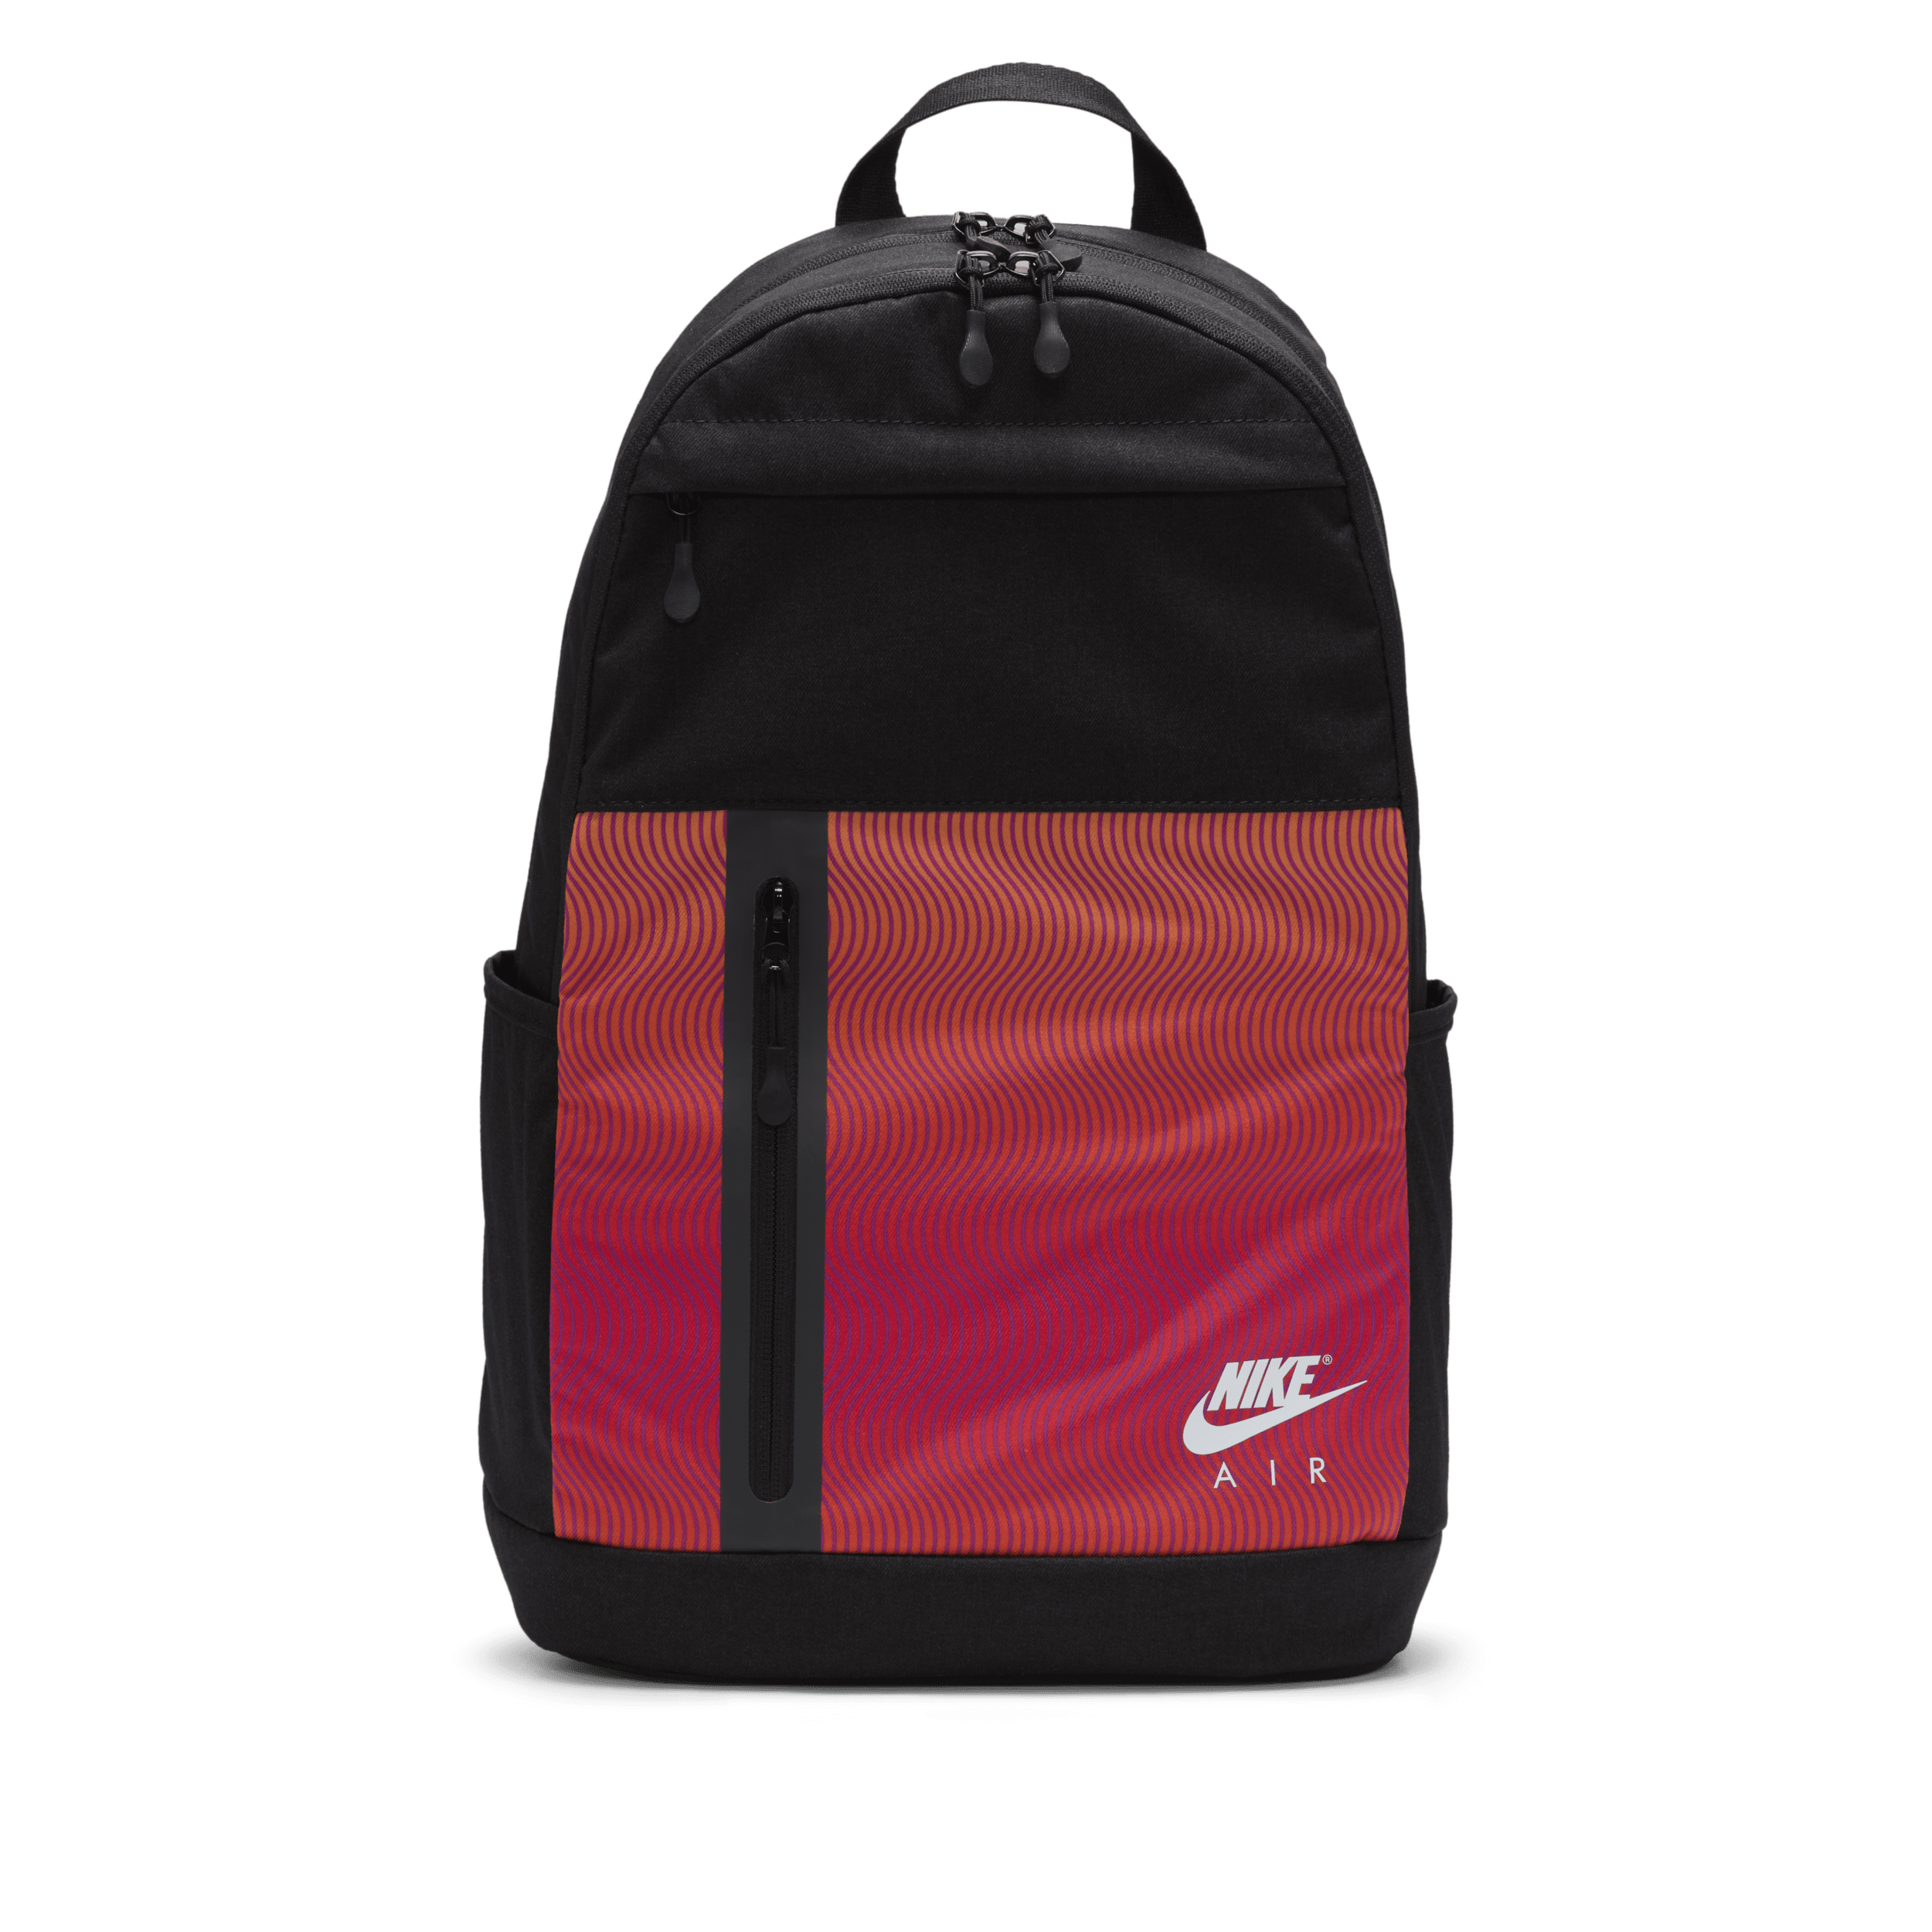 Nike Premium rugzak (21 liter) Zwart